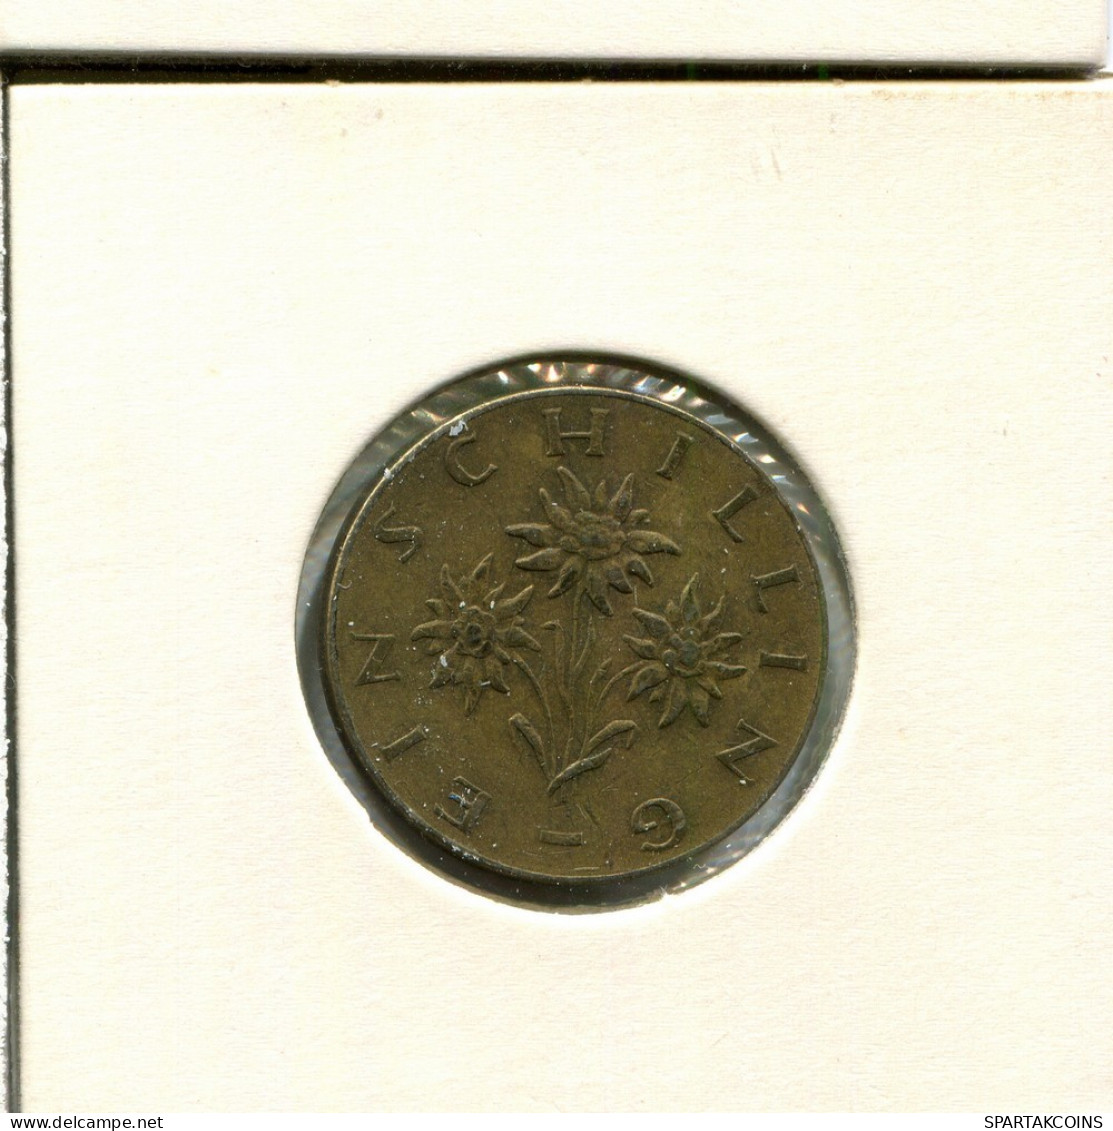 1 SCHILLING 1963 AUSTRIA Coin #AV071.U.A - Oostenrijk